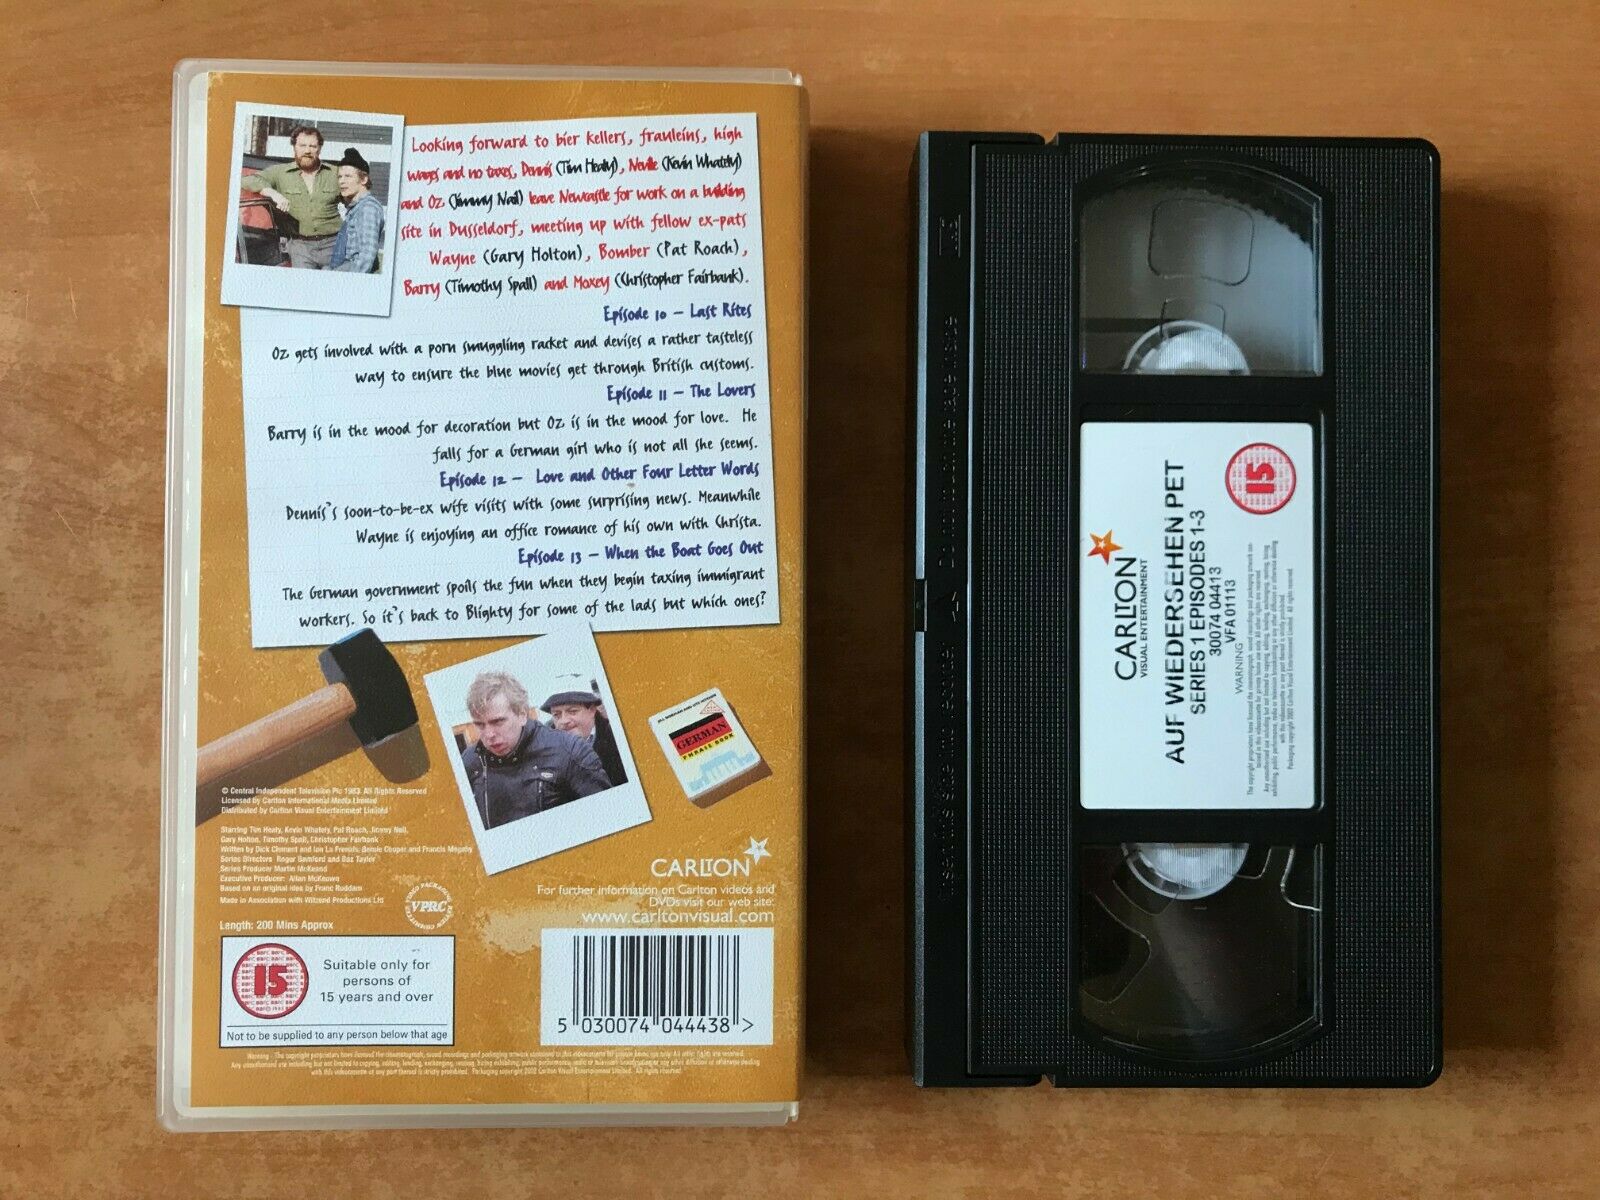 Auf Wiedershen Pet (Series 1, Ep. 10-13): Last Rites - TV Series - Comedy - VHS-